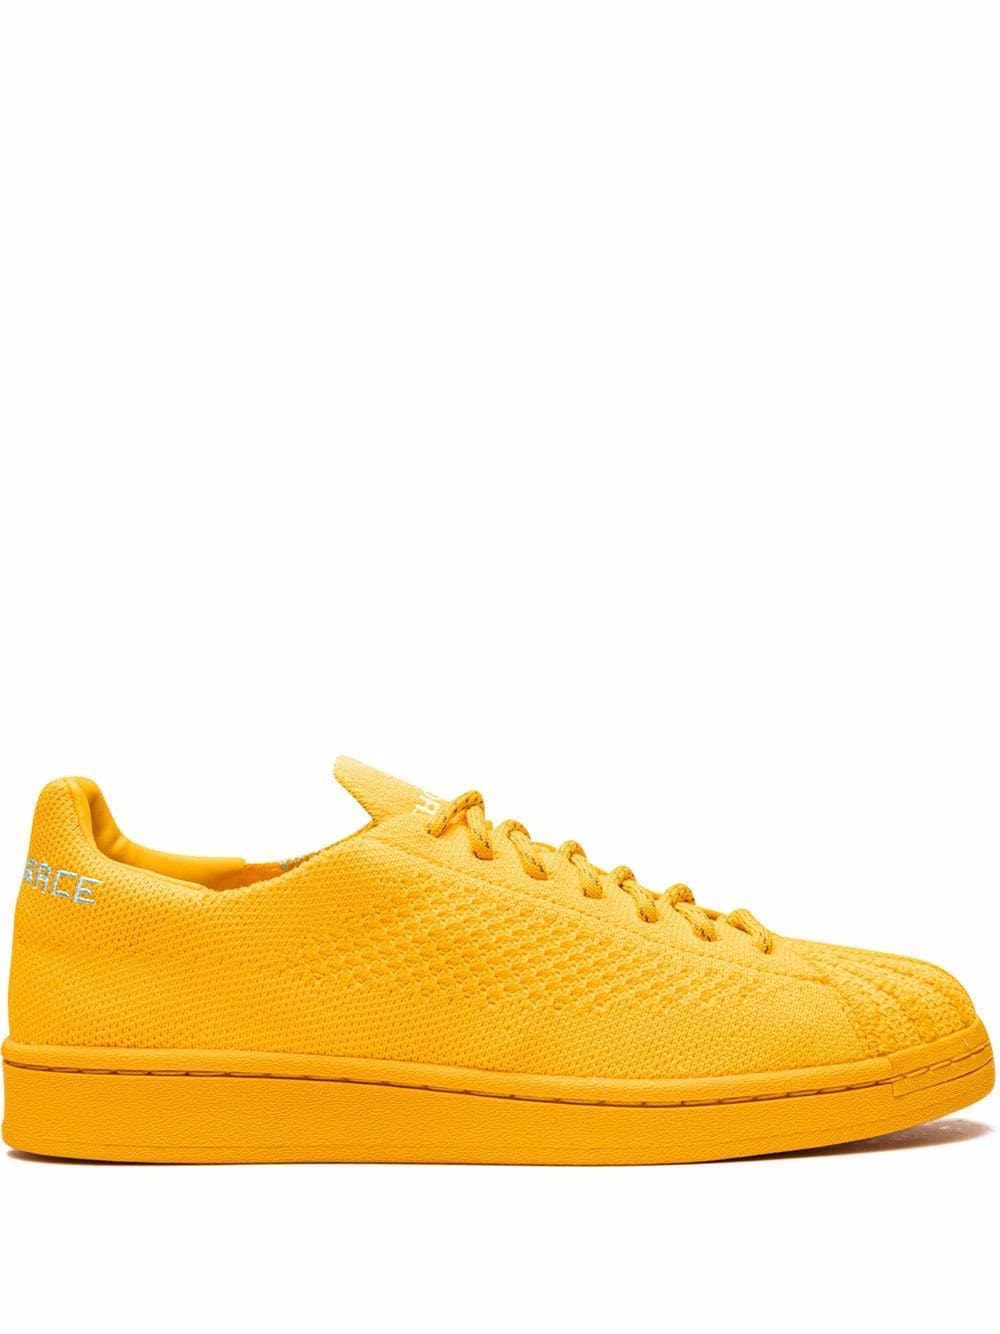 adidas x Pharrell Superstar primeknit sneakers - Yellow von adidas